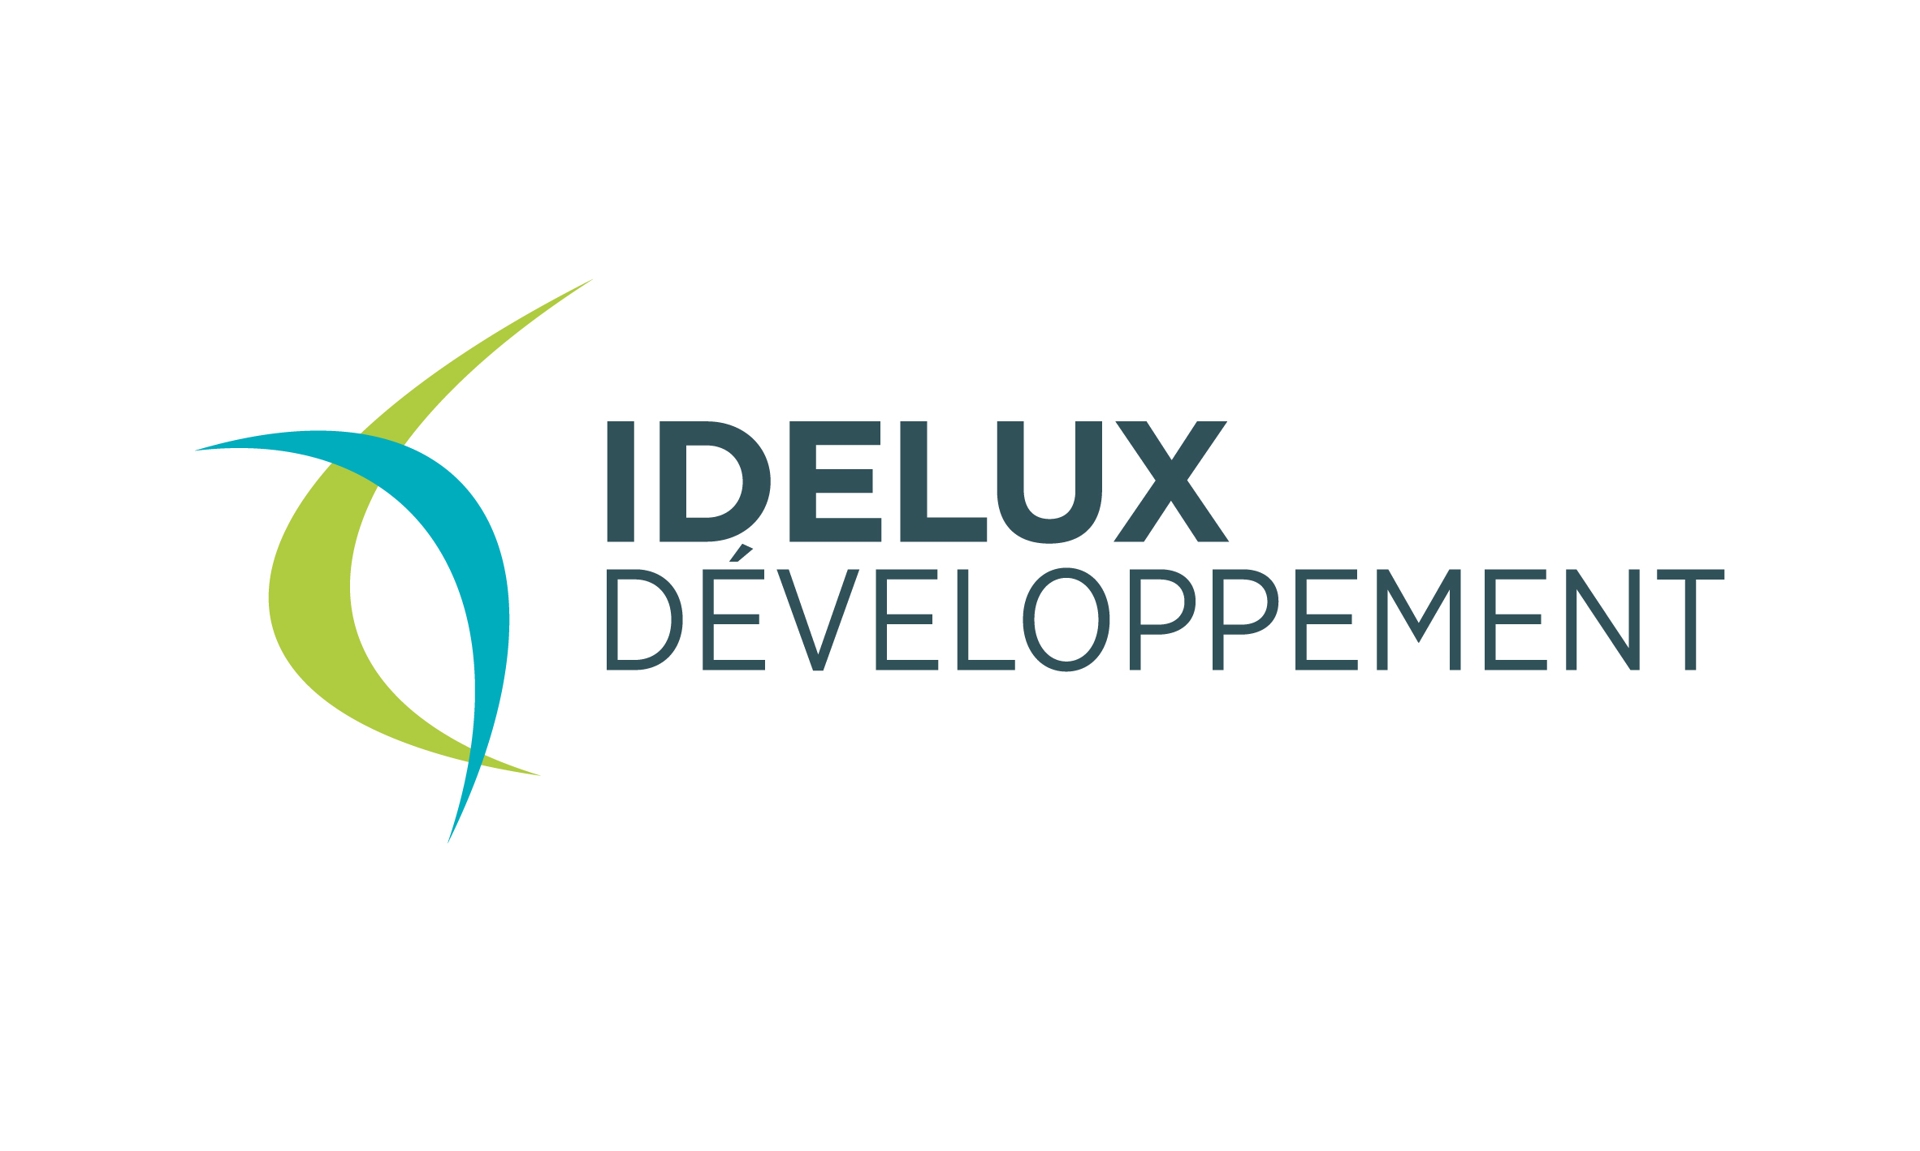 Idelux Developpement